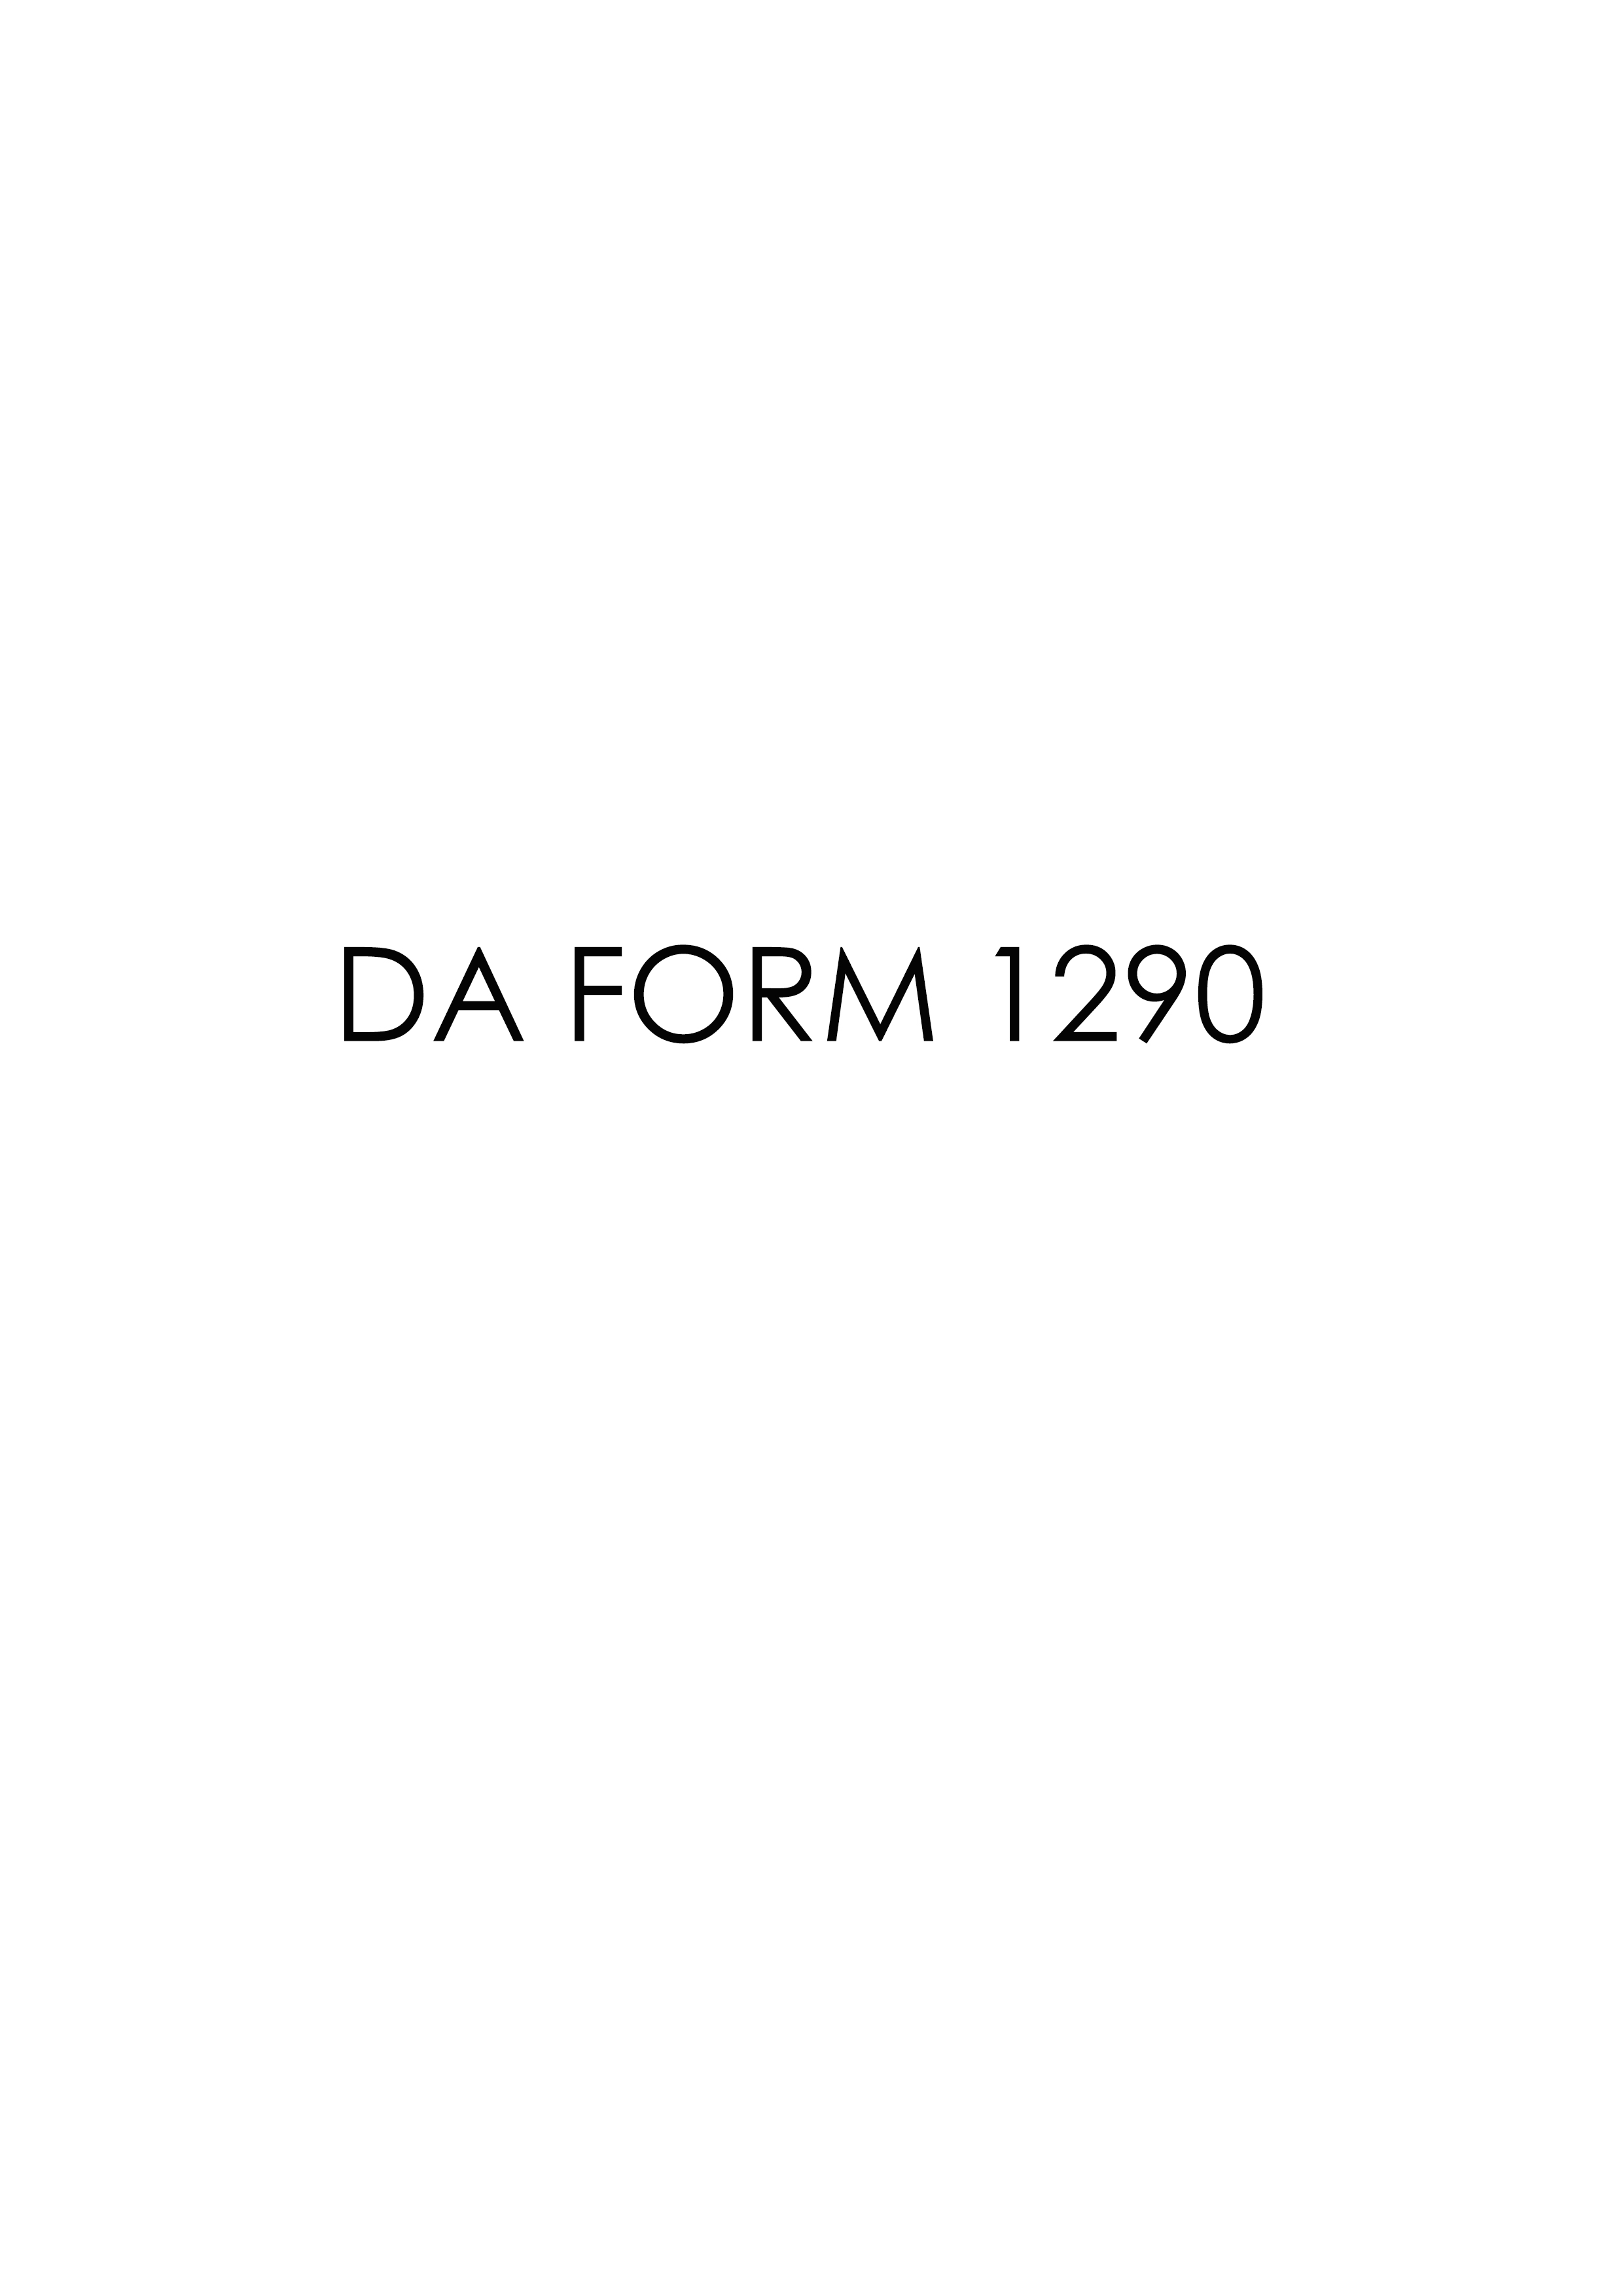 Download da 1290 Form